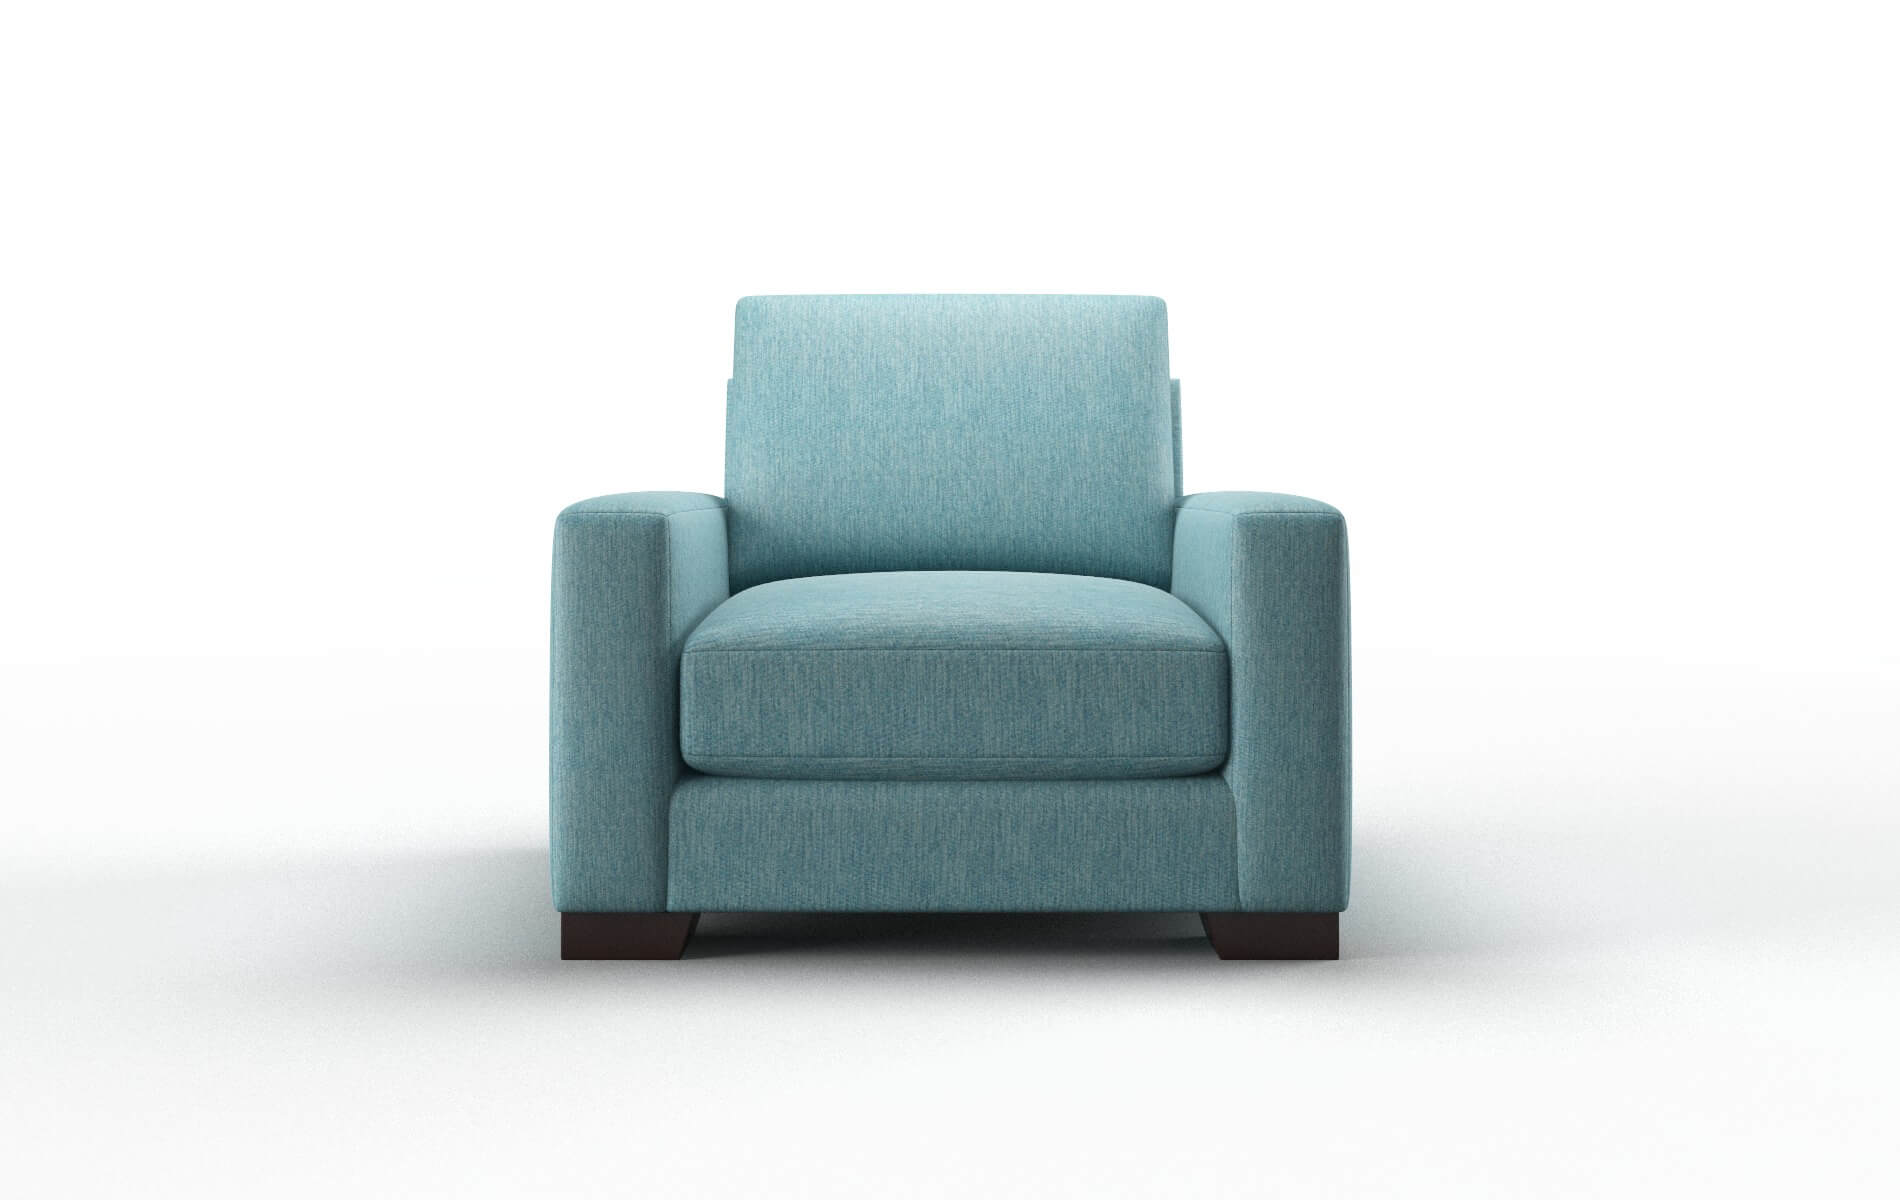 London Cosmo Turquoise Chair espresso legs 1